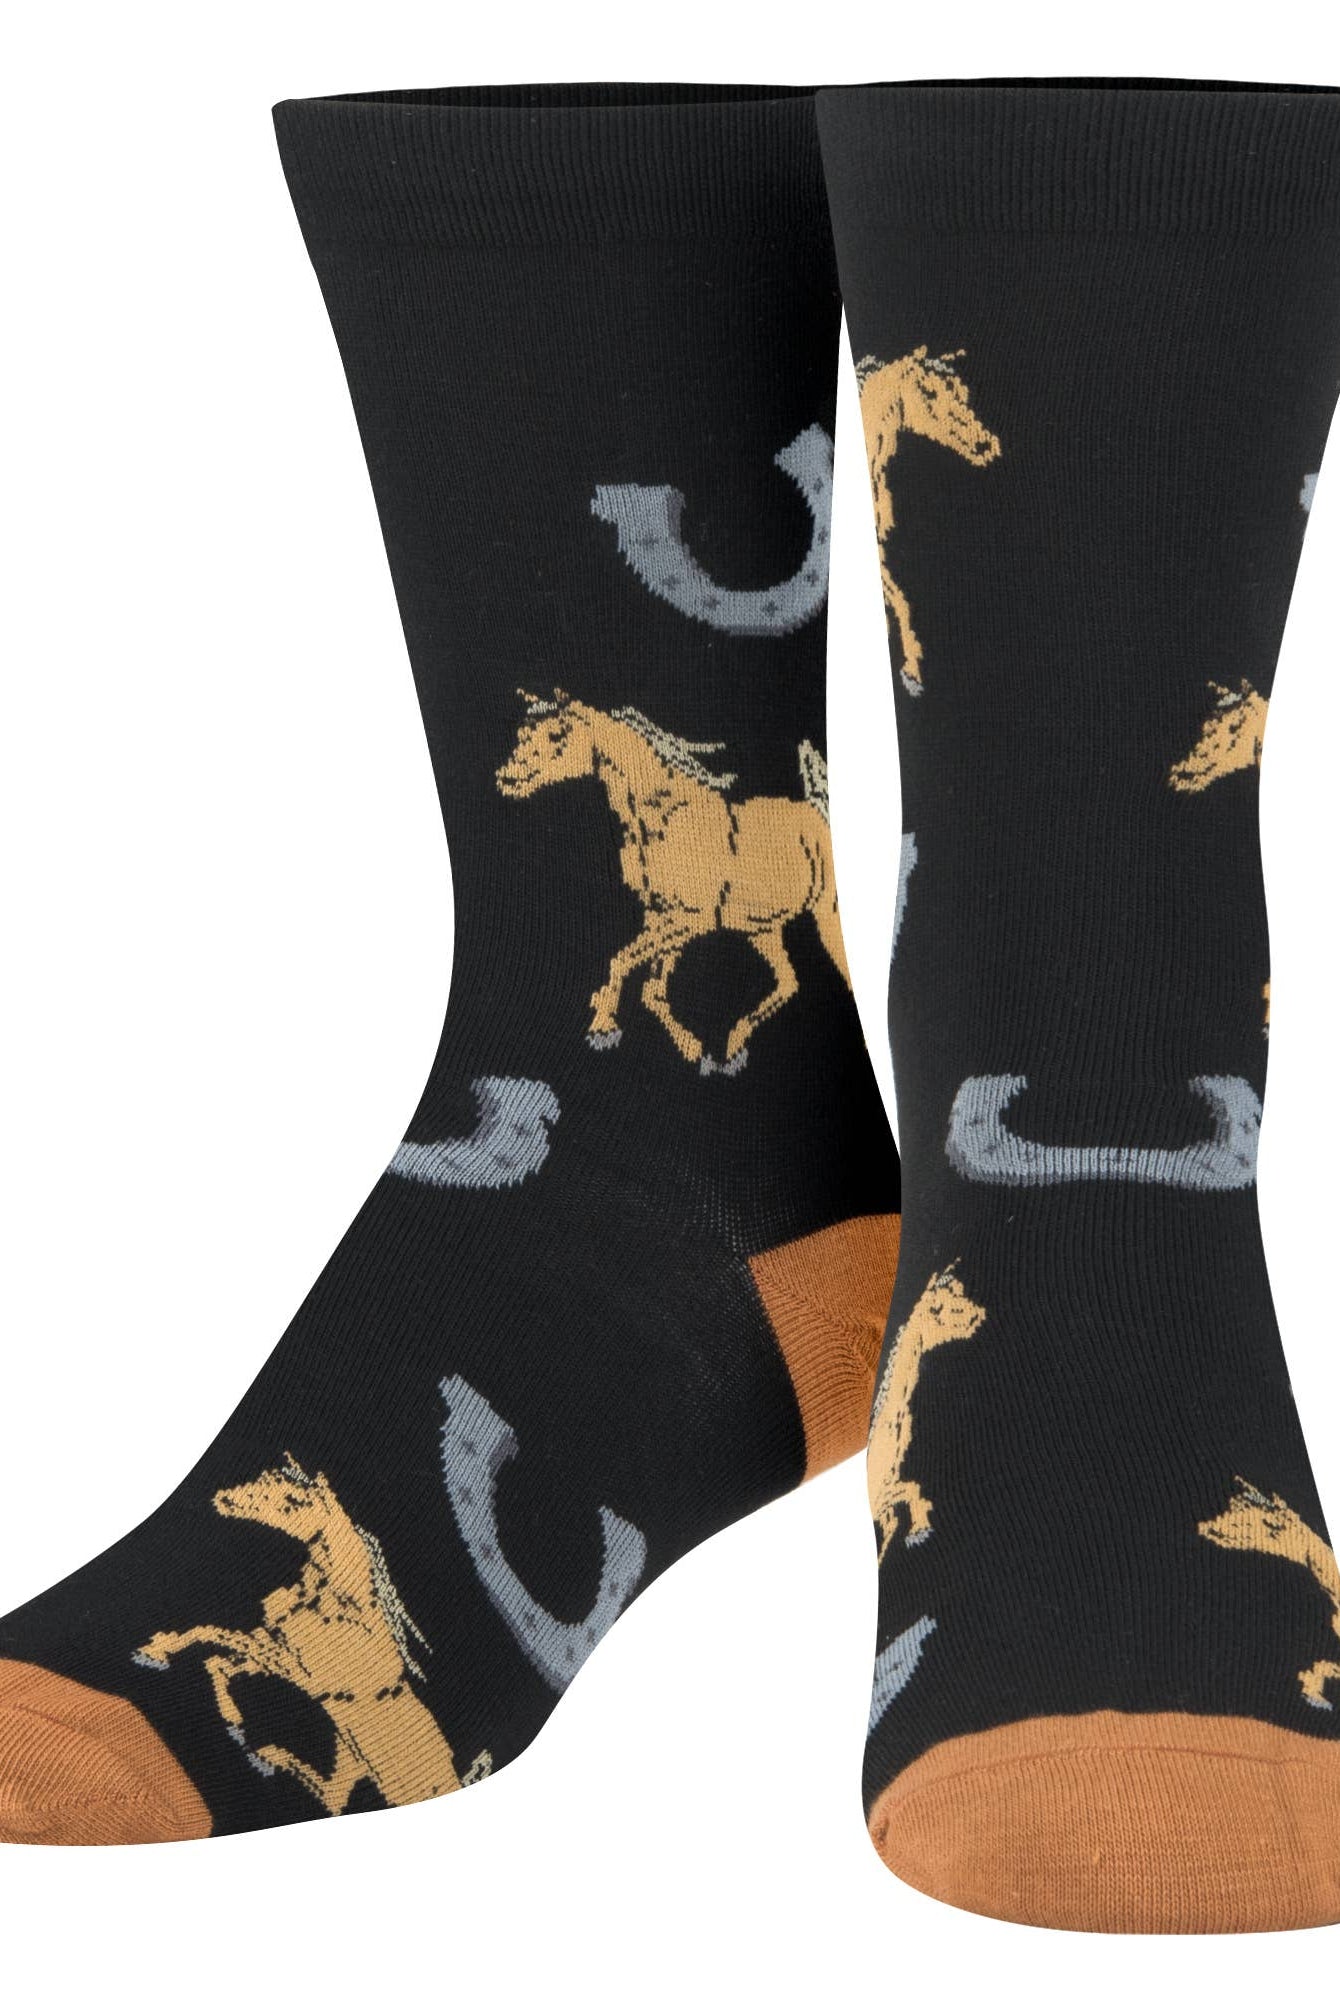 Crazy Socks - Womens Crew - Horses | Stuffology Boutique-Socks-Crazy Socks-Stuffology - Where Vintage Meets Modern, A Boutique for Real Women in Crosbyton, TX